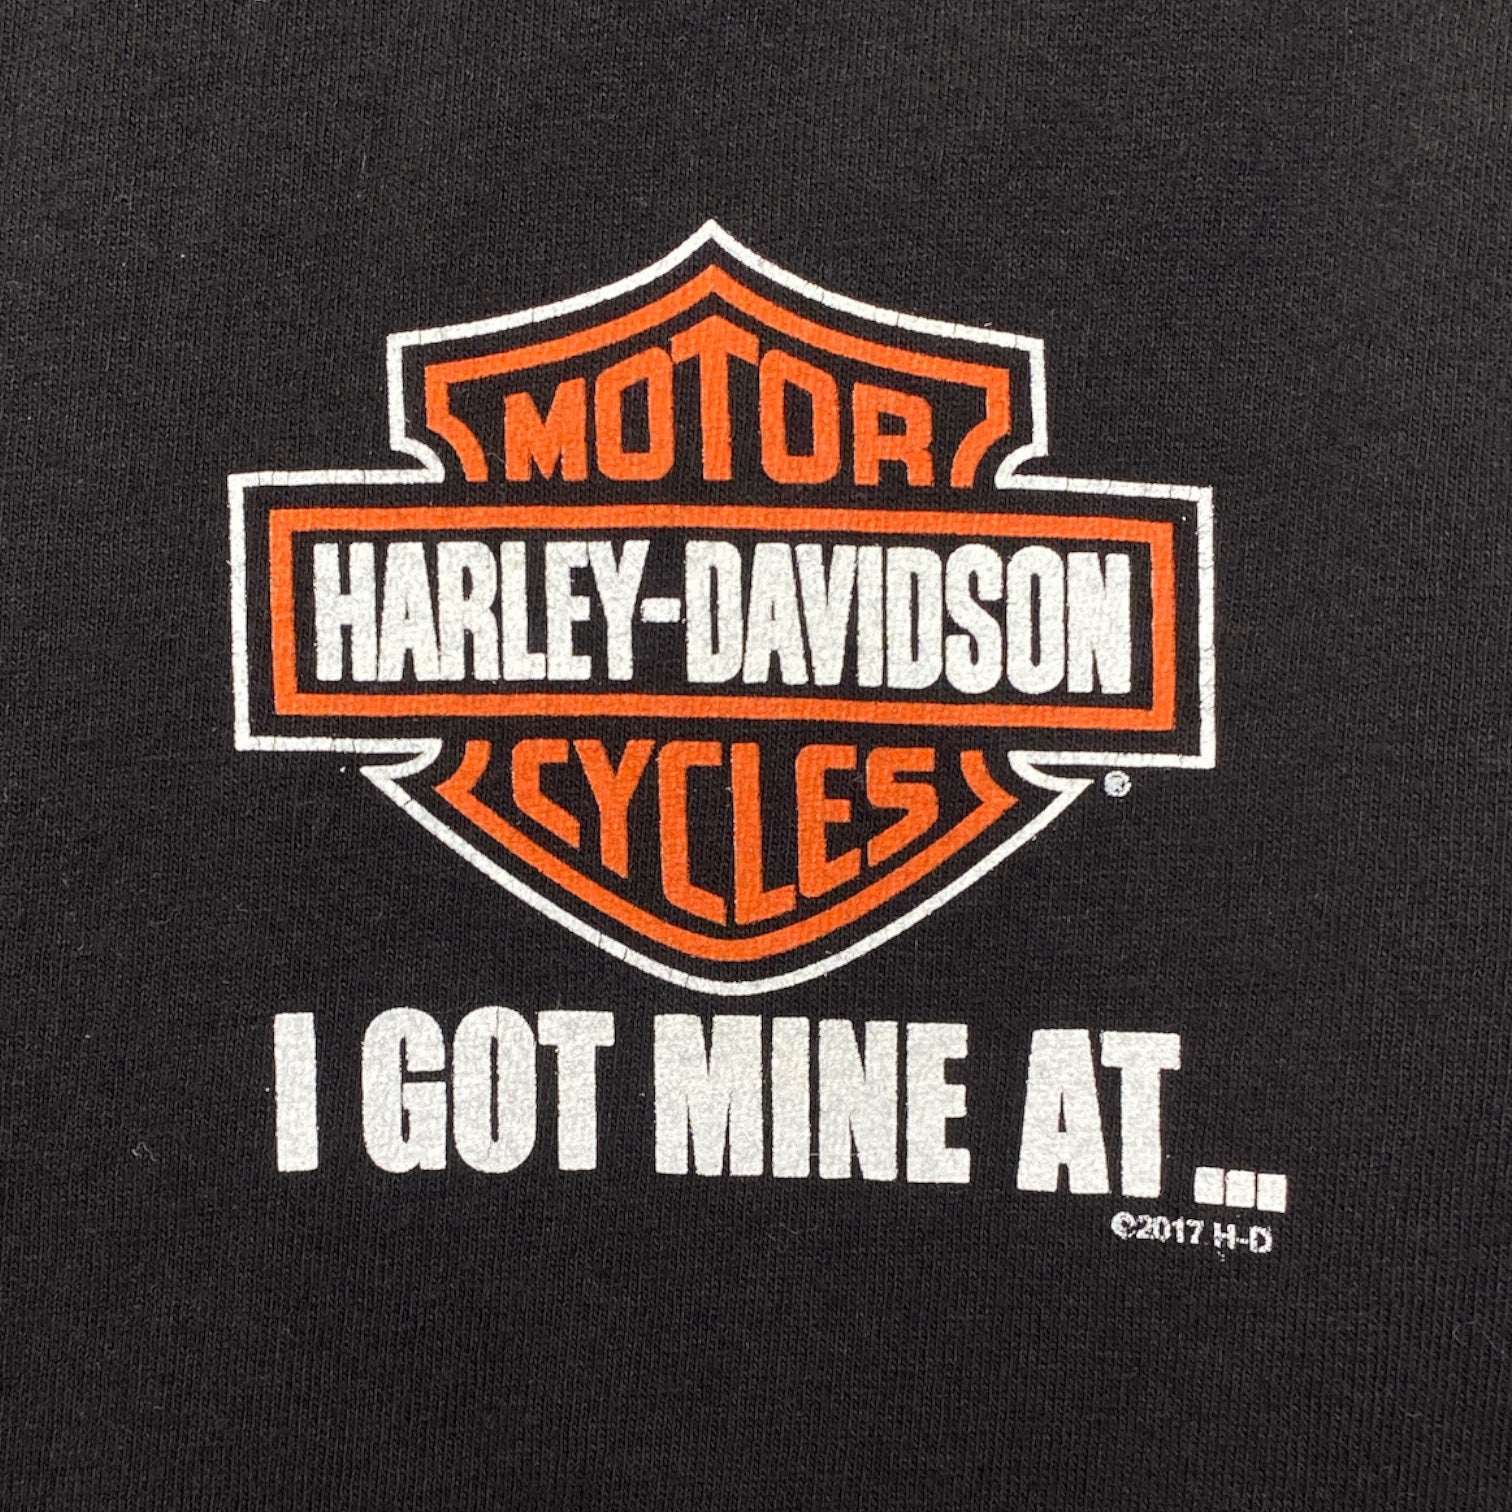 MOTOR HARLEY-DAVIDSON CYCLES I GOT MINE AT Tee